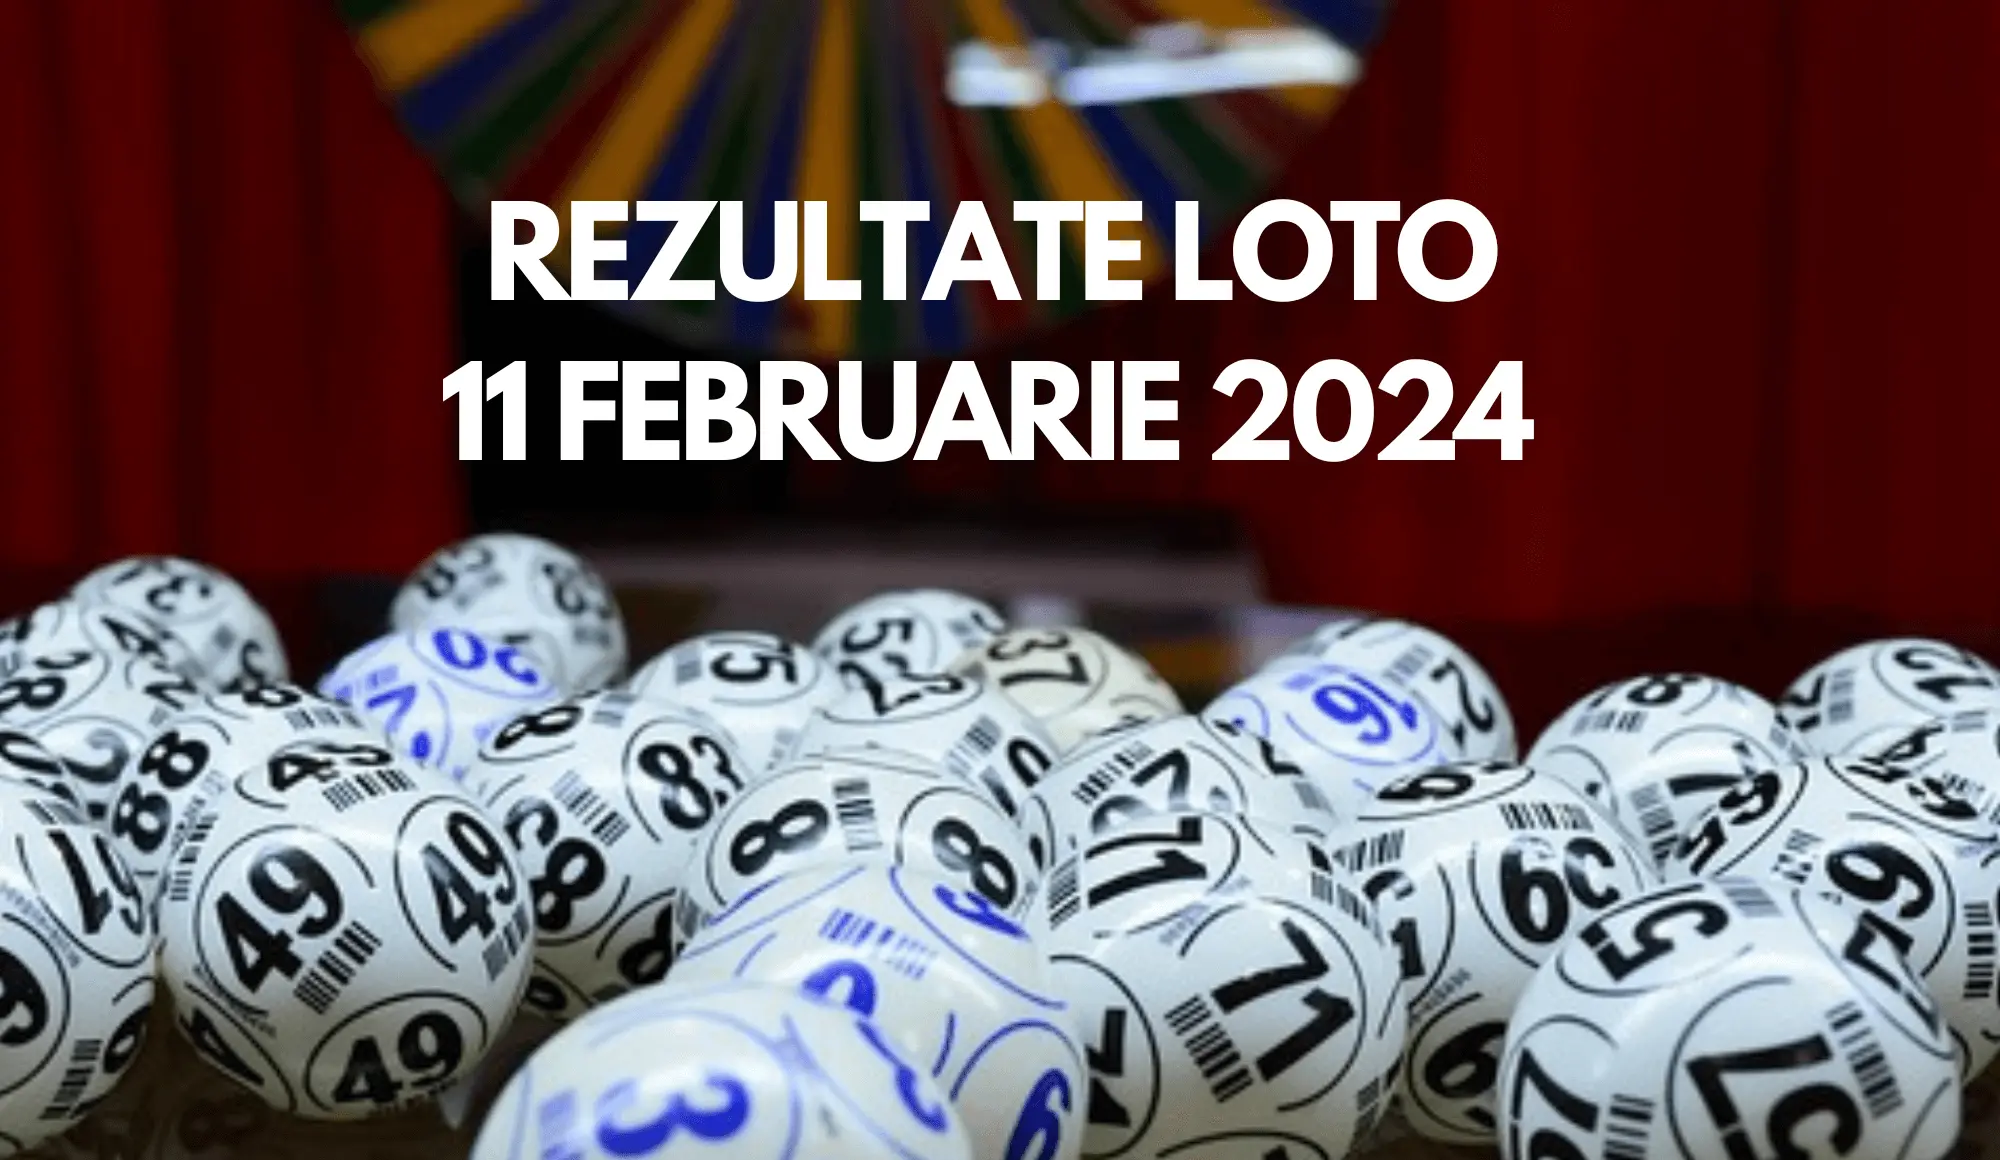 Rezultate Loto 11 februarie 2024 – Loto 6/49, Loto 5/40, Joker și Noroc